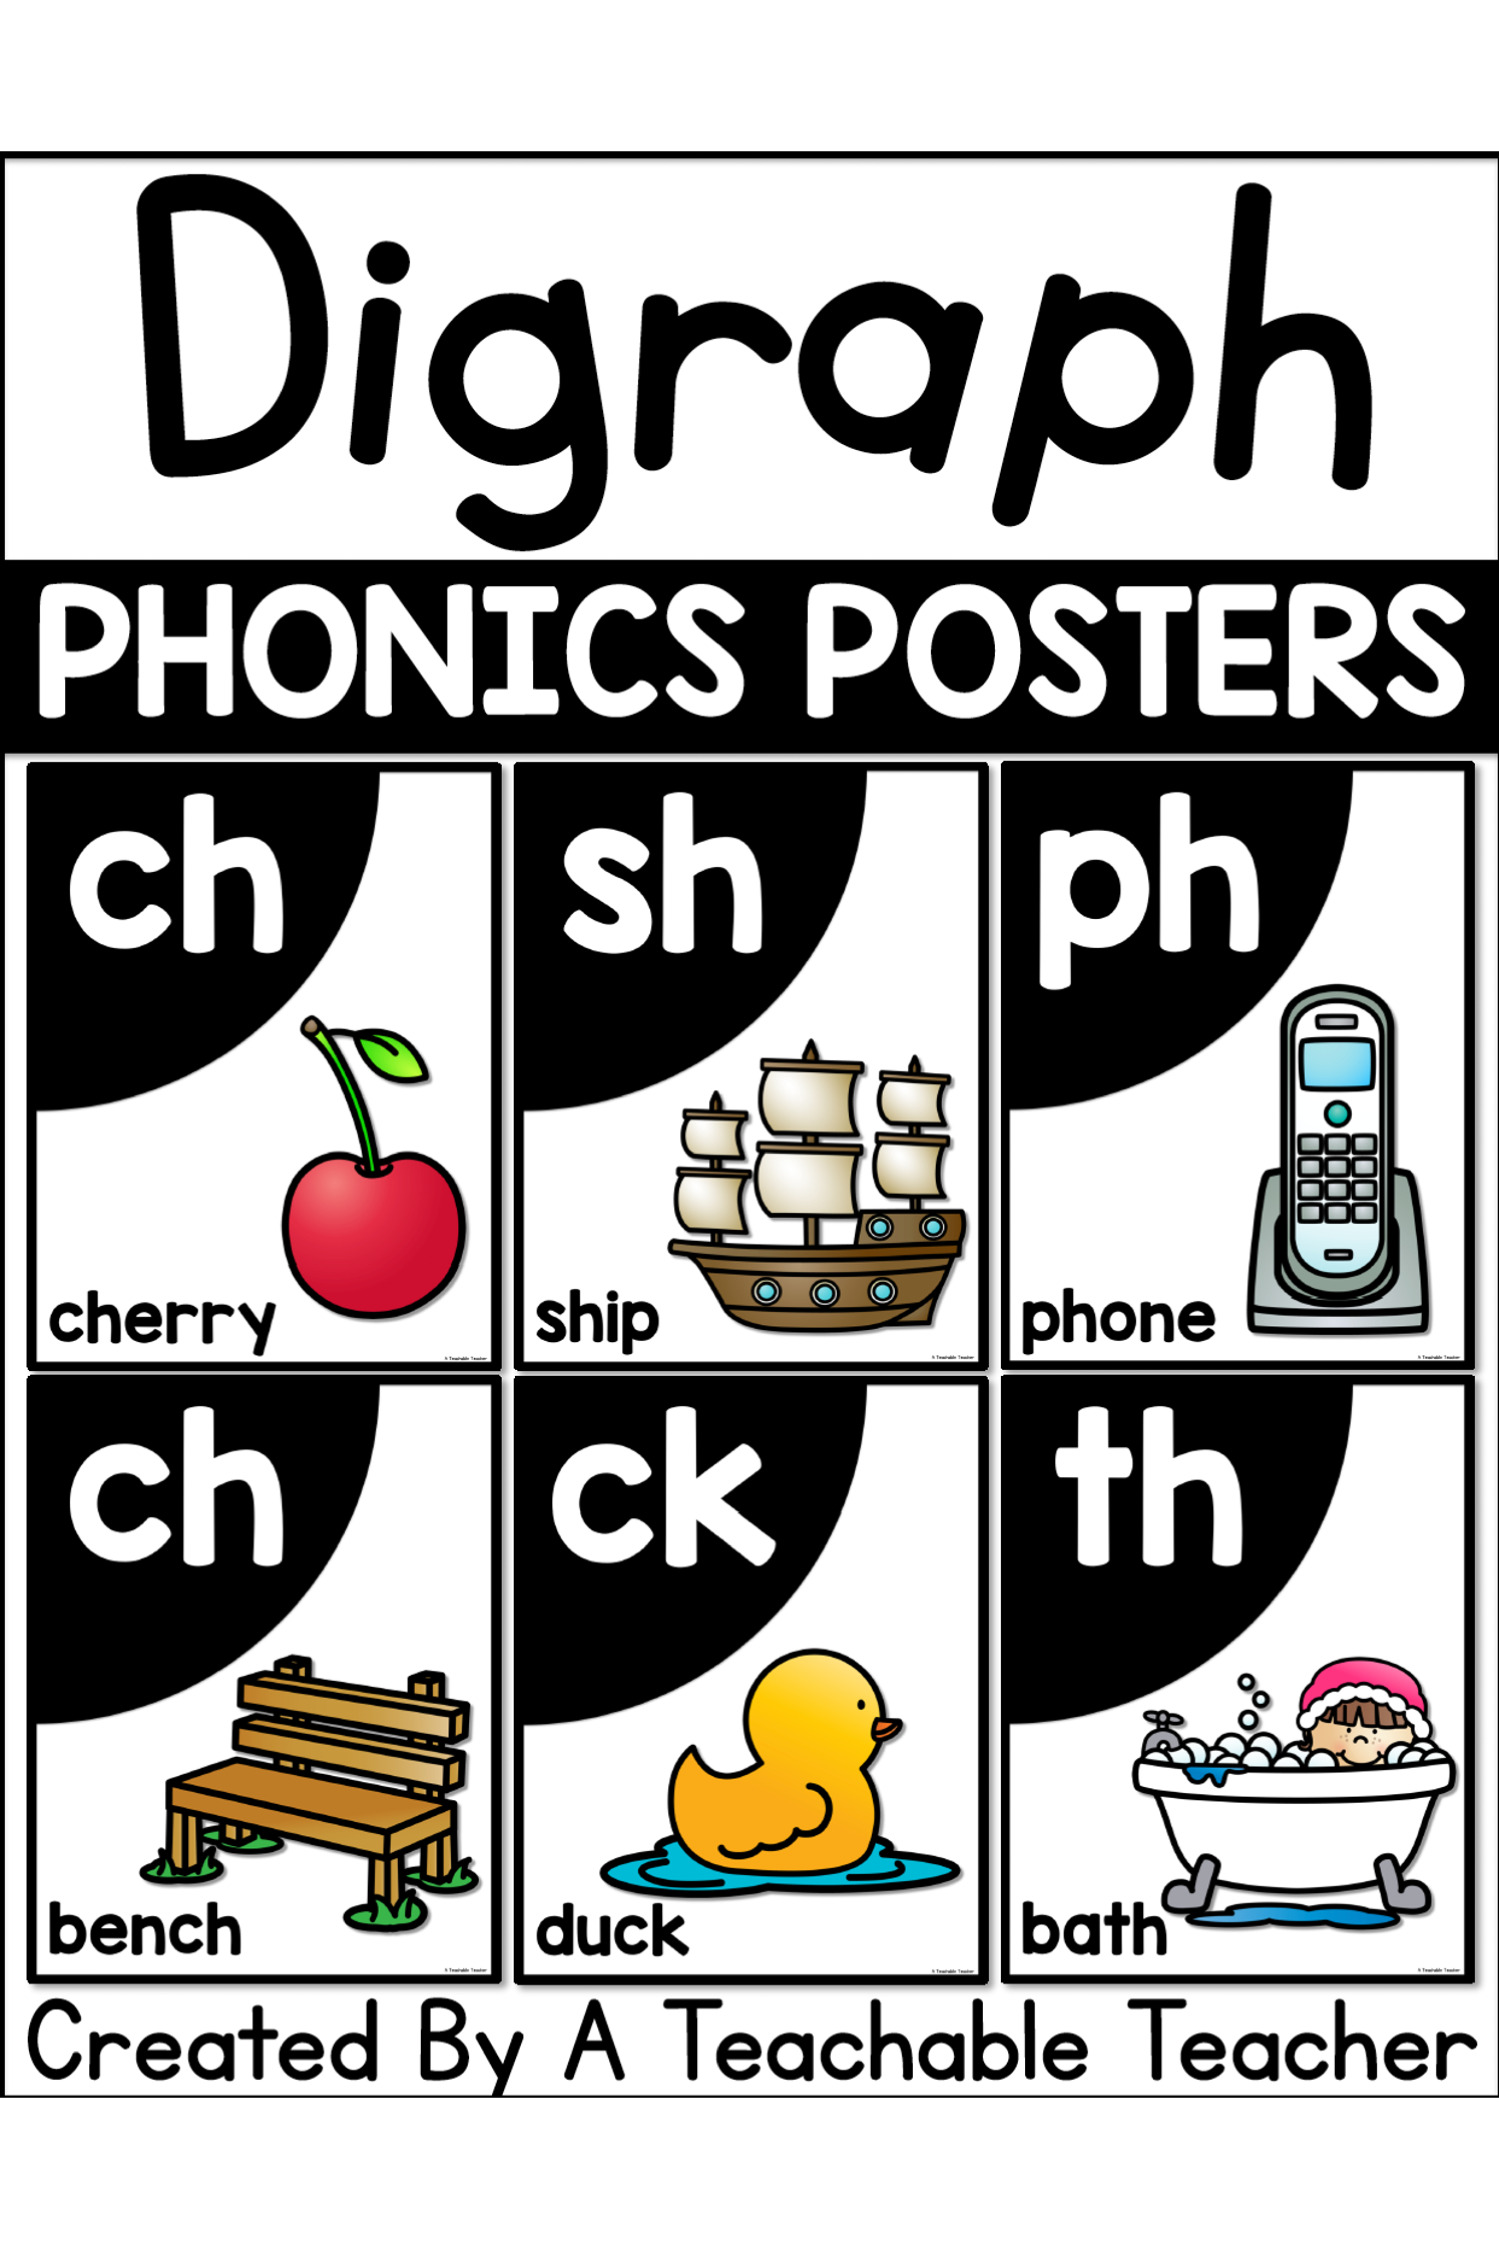 Wordwall sh ch. Digraphs английский. Диграфы в английском языке для детей. Ch sh PH th плакат. Phonics sh Ch PH th.